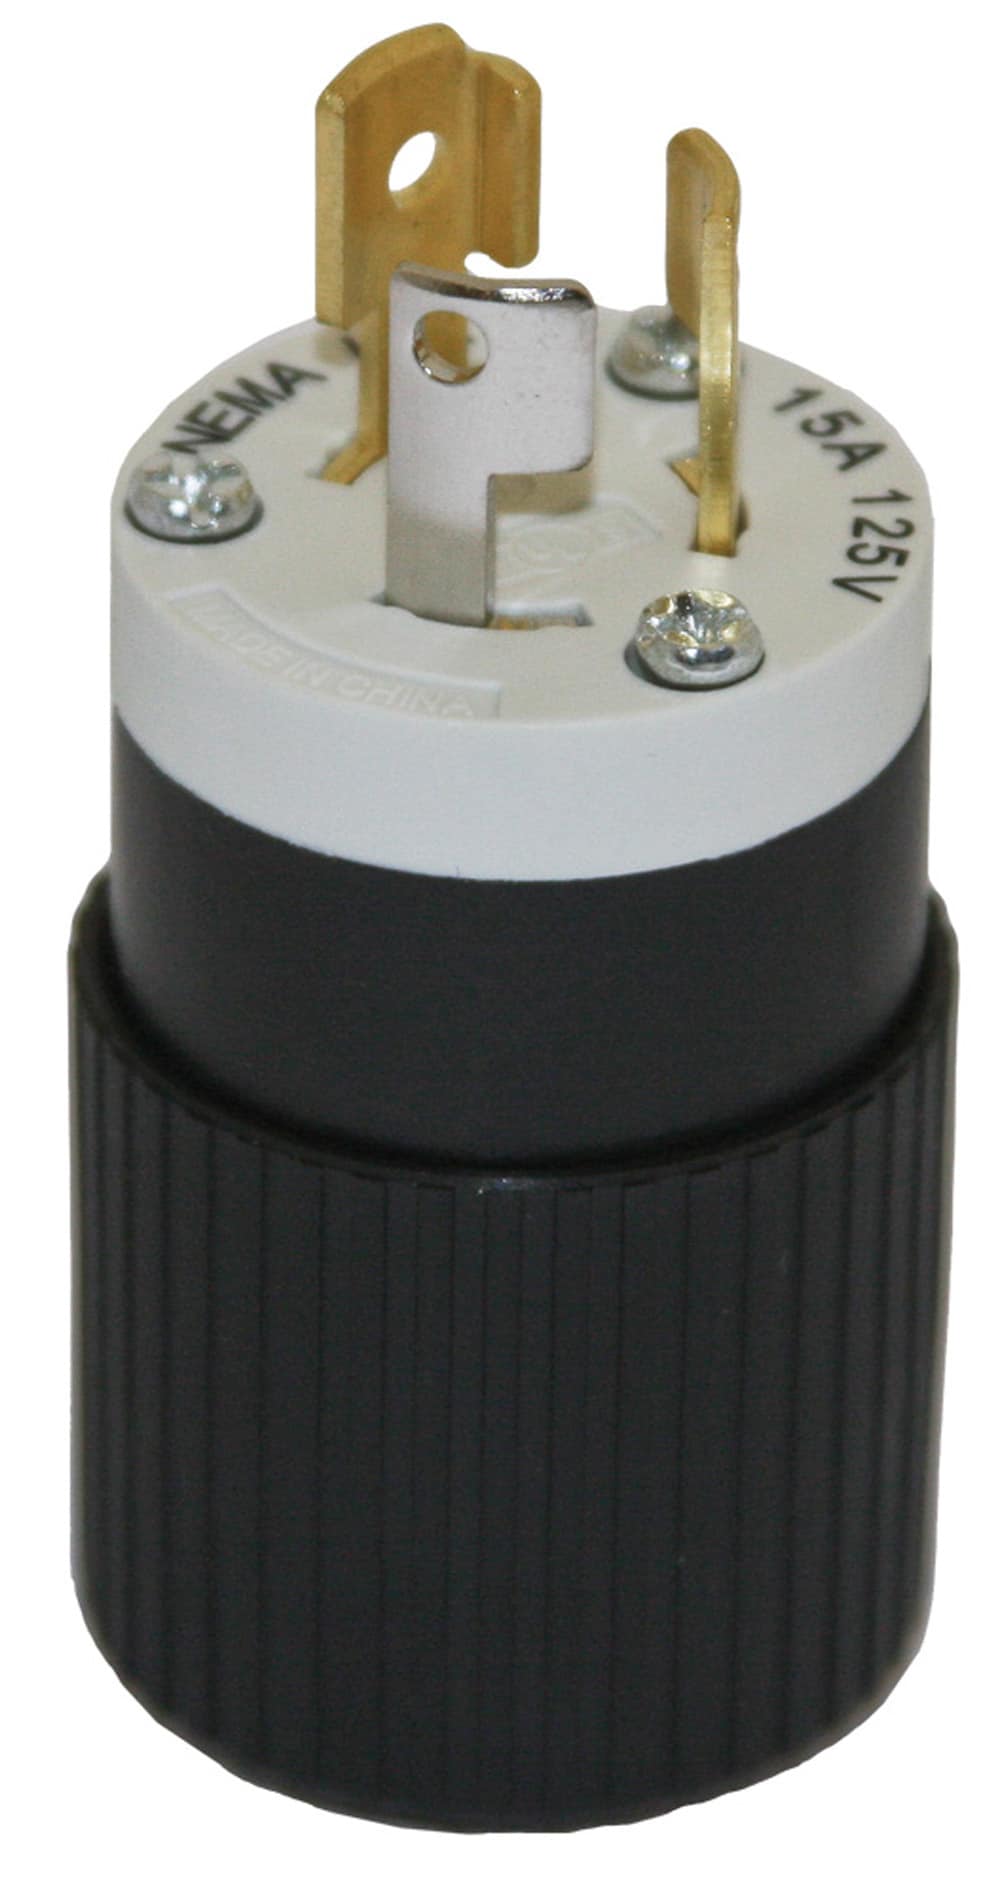 Details about   General Electric L5 Twist Lock Female Connector Plug 15A 125V  NOS 